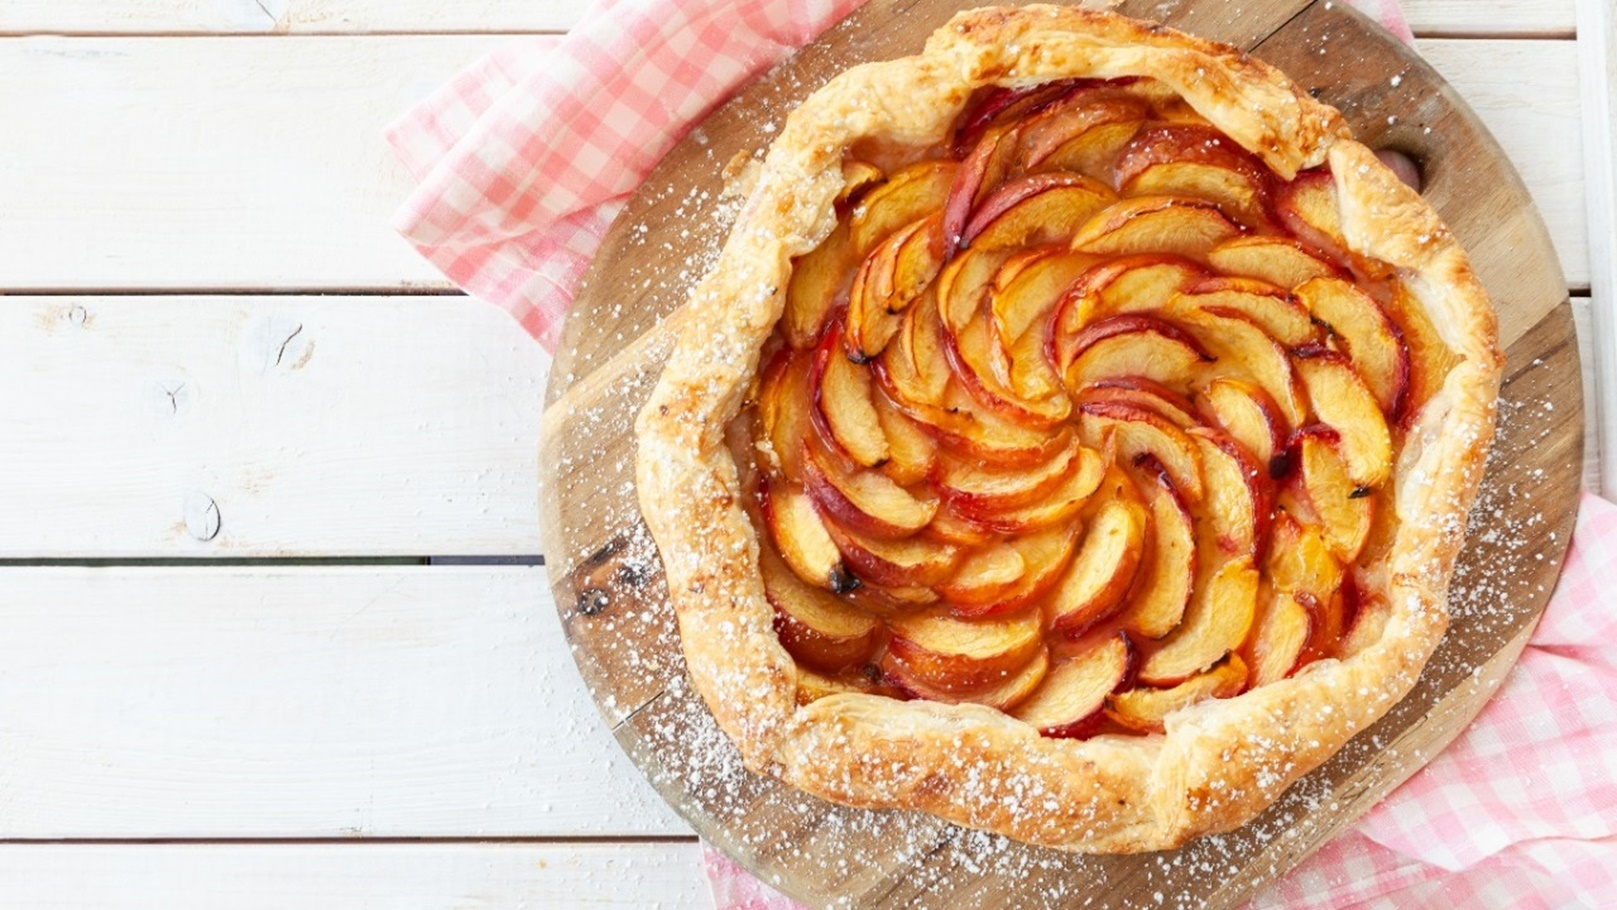 delicious-homemade-peach-pie-on-wooden-background-2021-12-09-04-44-44-utc